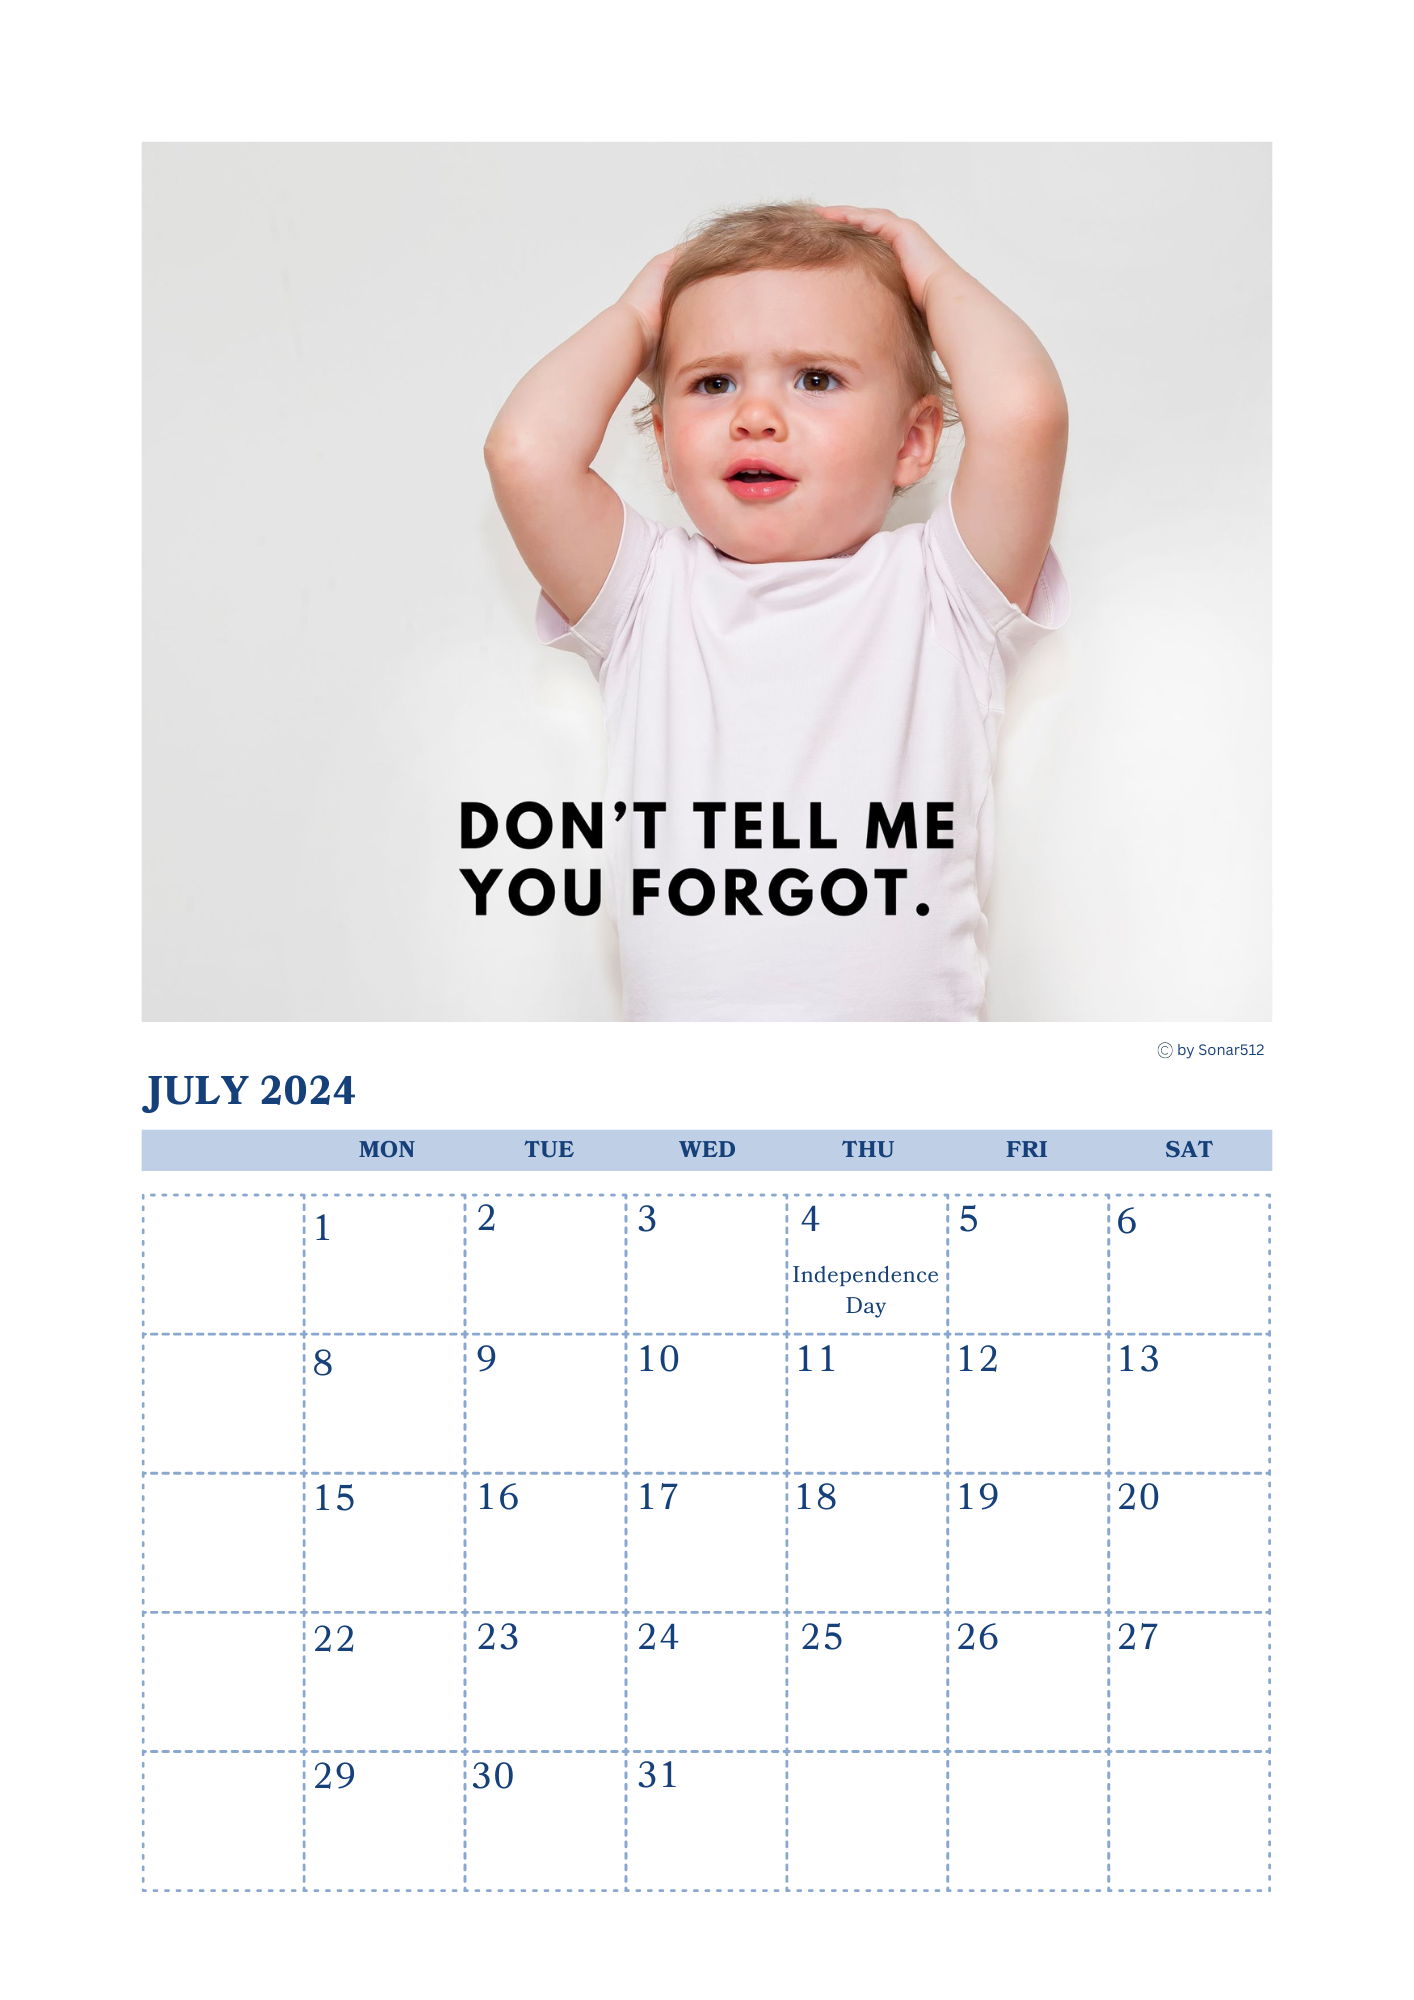 Funny Baby Calendar 2024 Monthly Calendar - (Jan - Dec 2024)